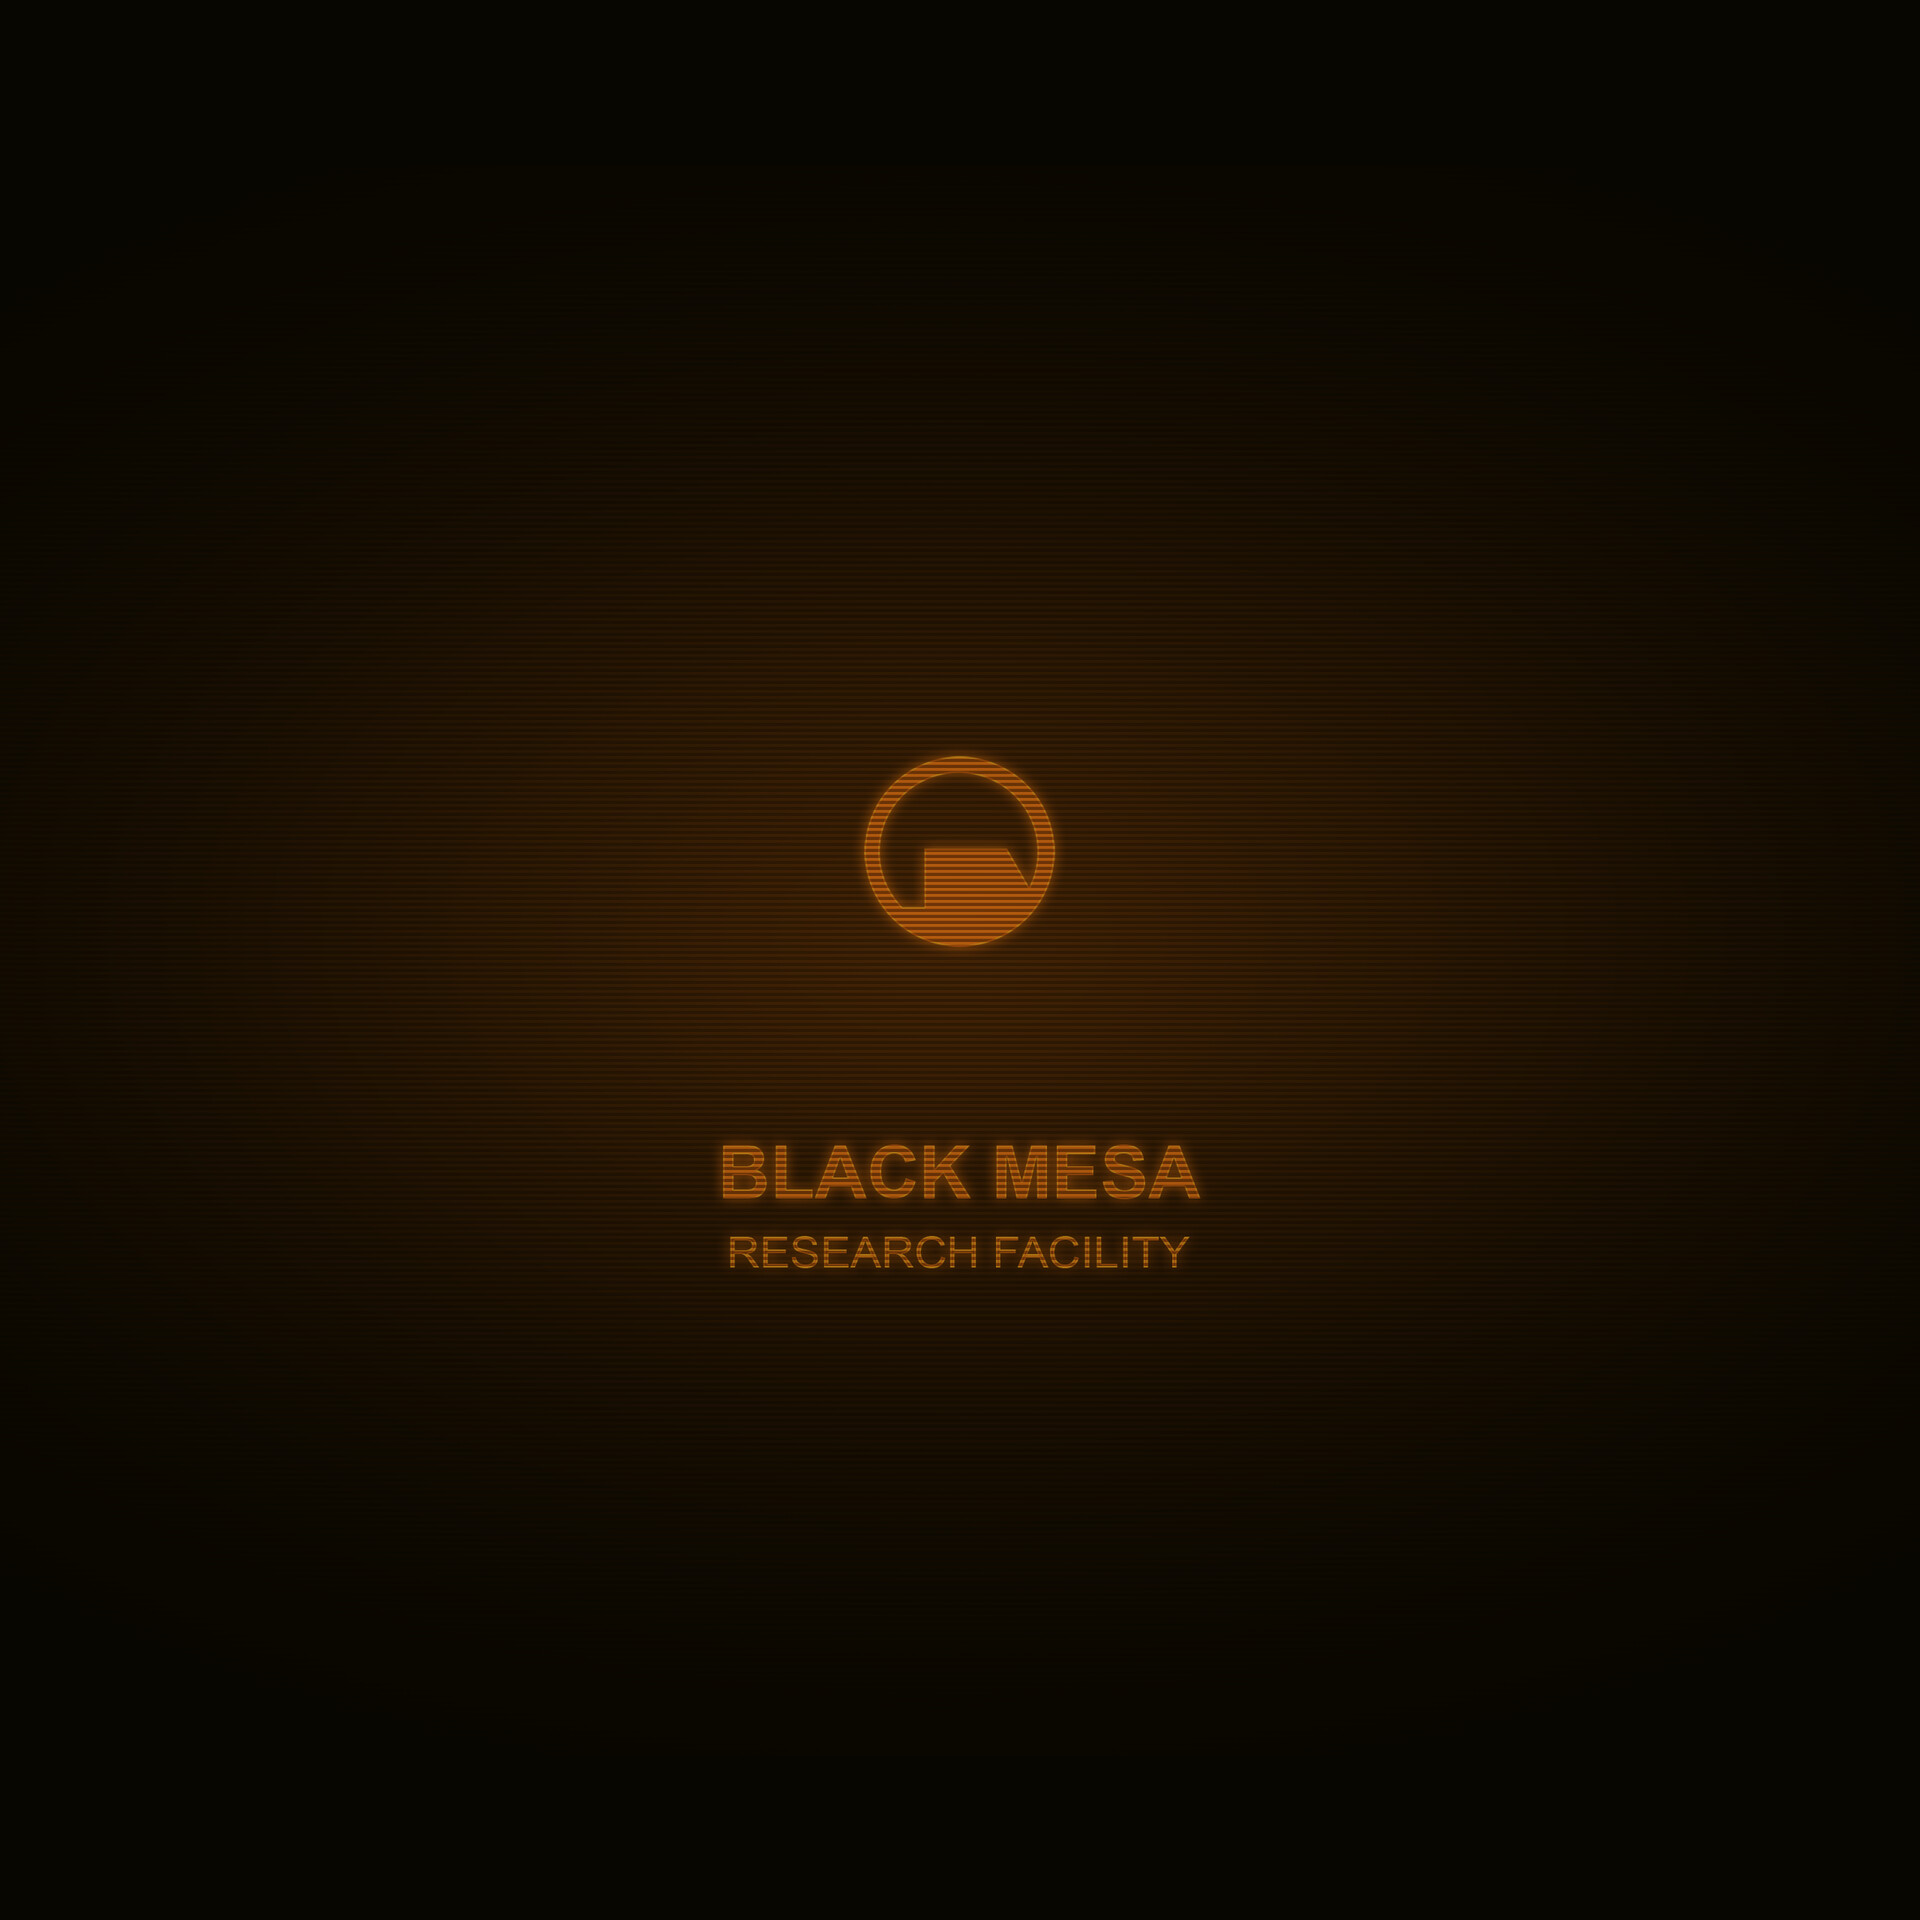 1920X1080 Black Mesa Wallpapers  Top Free 1920X1080 Black Mesa Backgrounds   WallpaperAccess